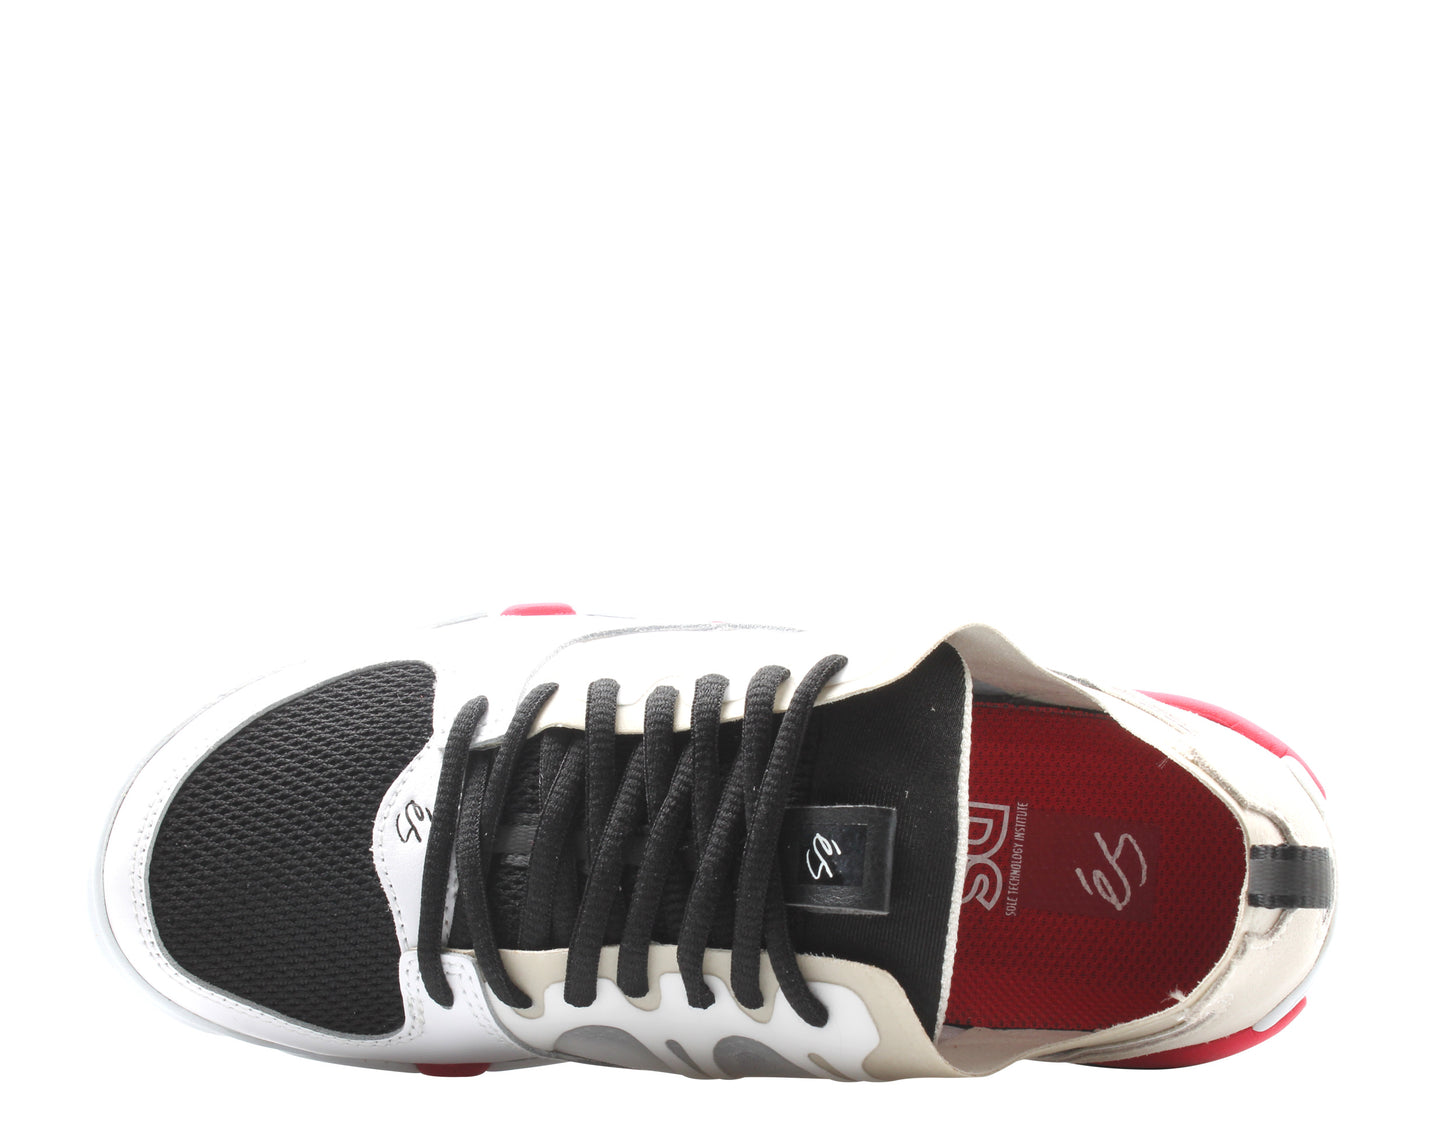 eS Footwear Silo White/Black/Red Men's Skateboard Sneakers 5101000167114